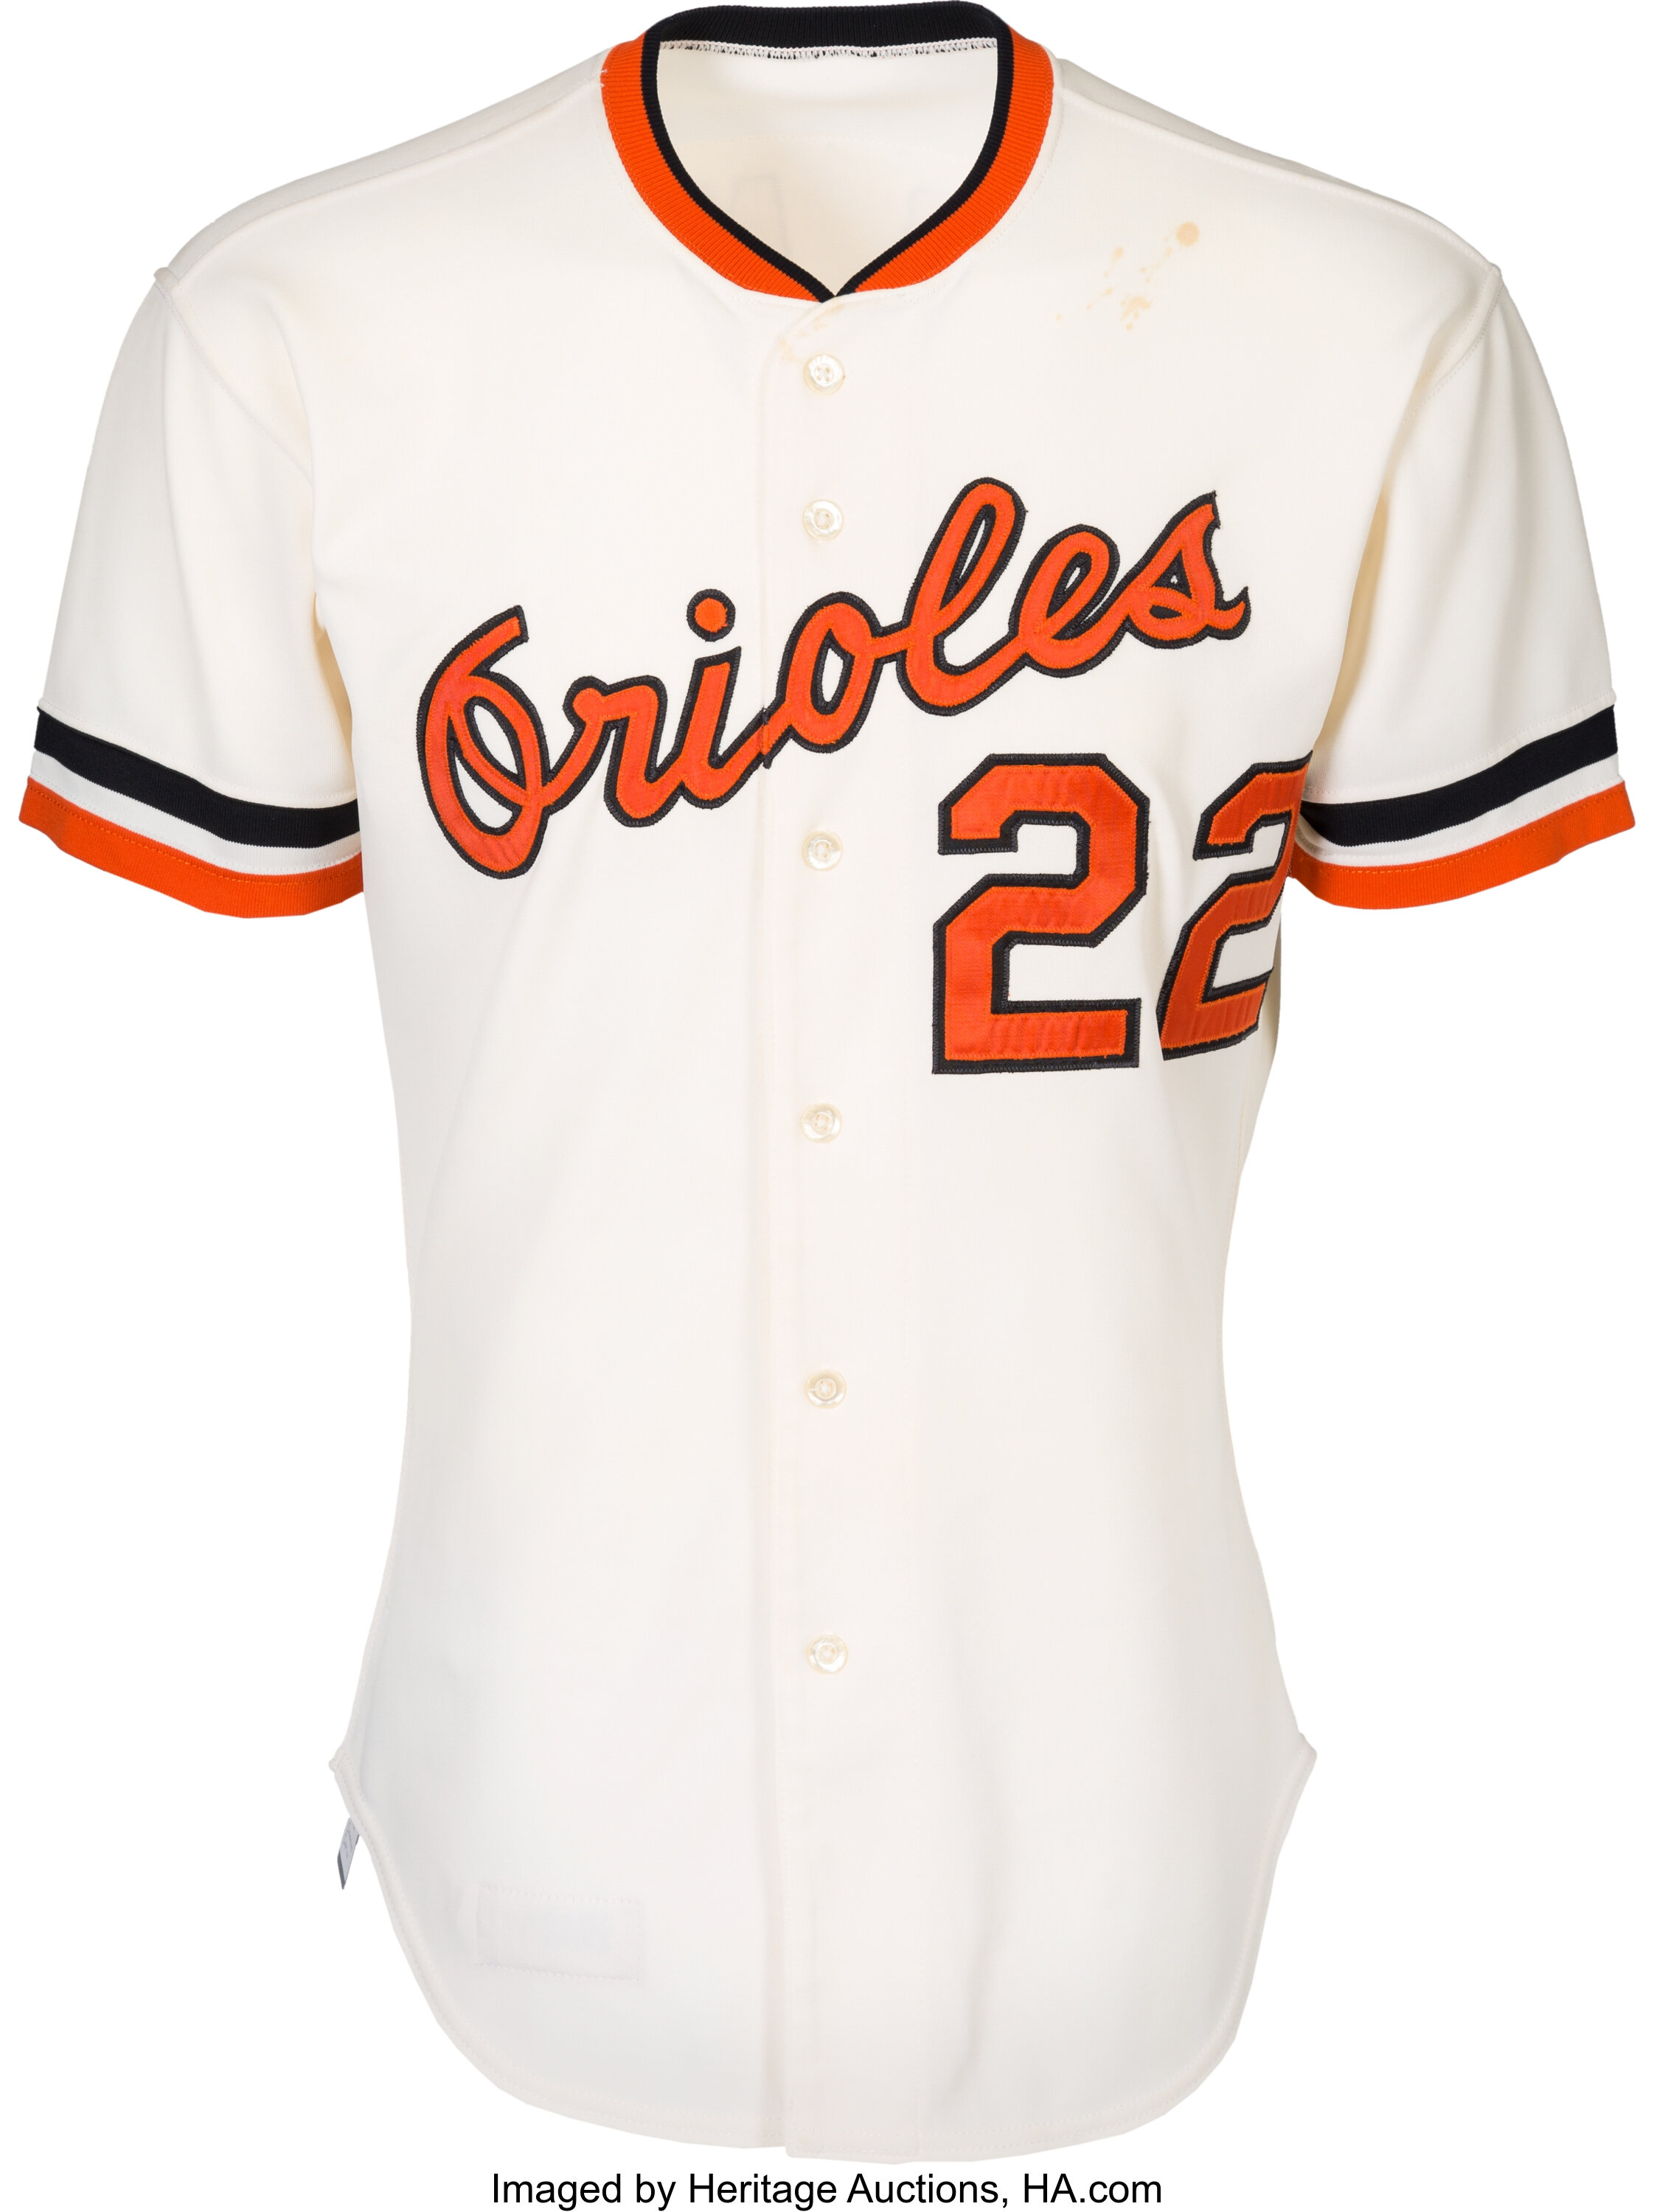 Baltimore Orioles unveil 2012 uniform changes - Baltimore Business Journal